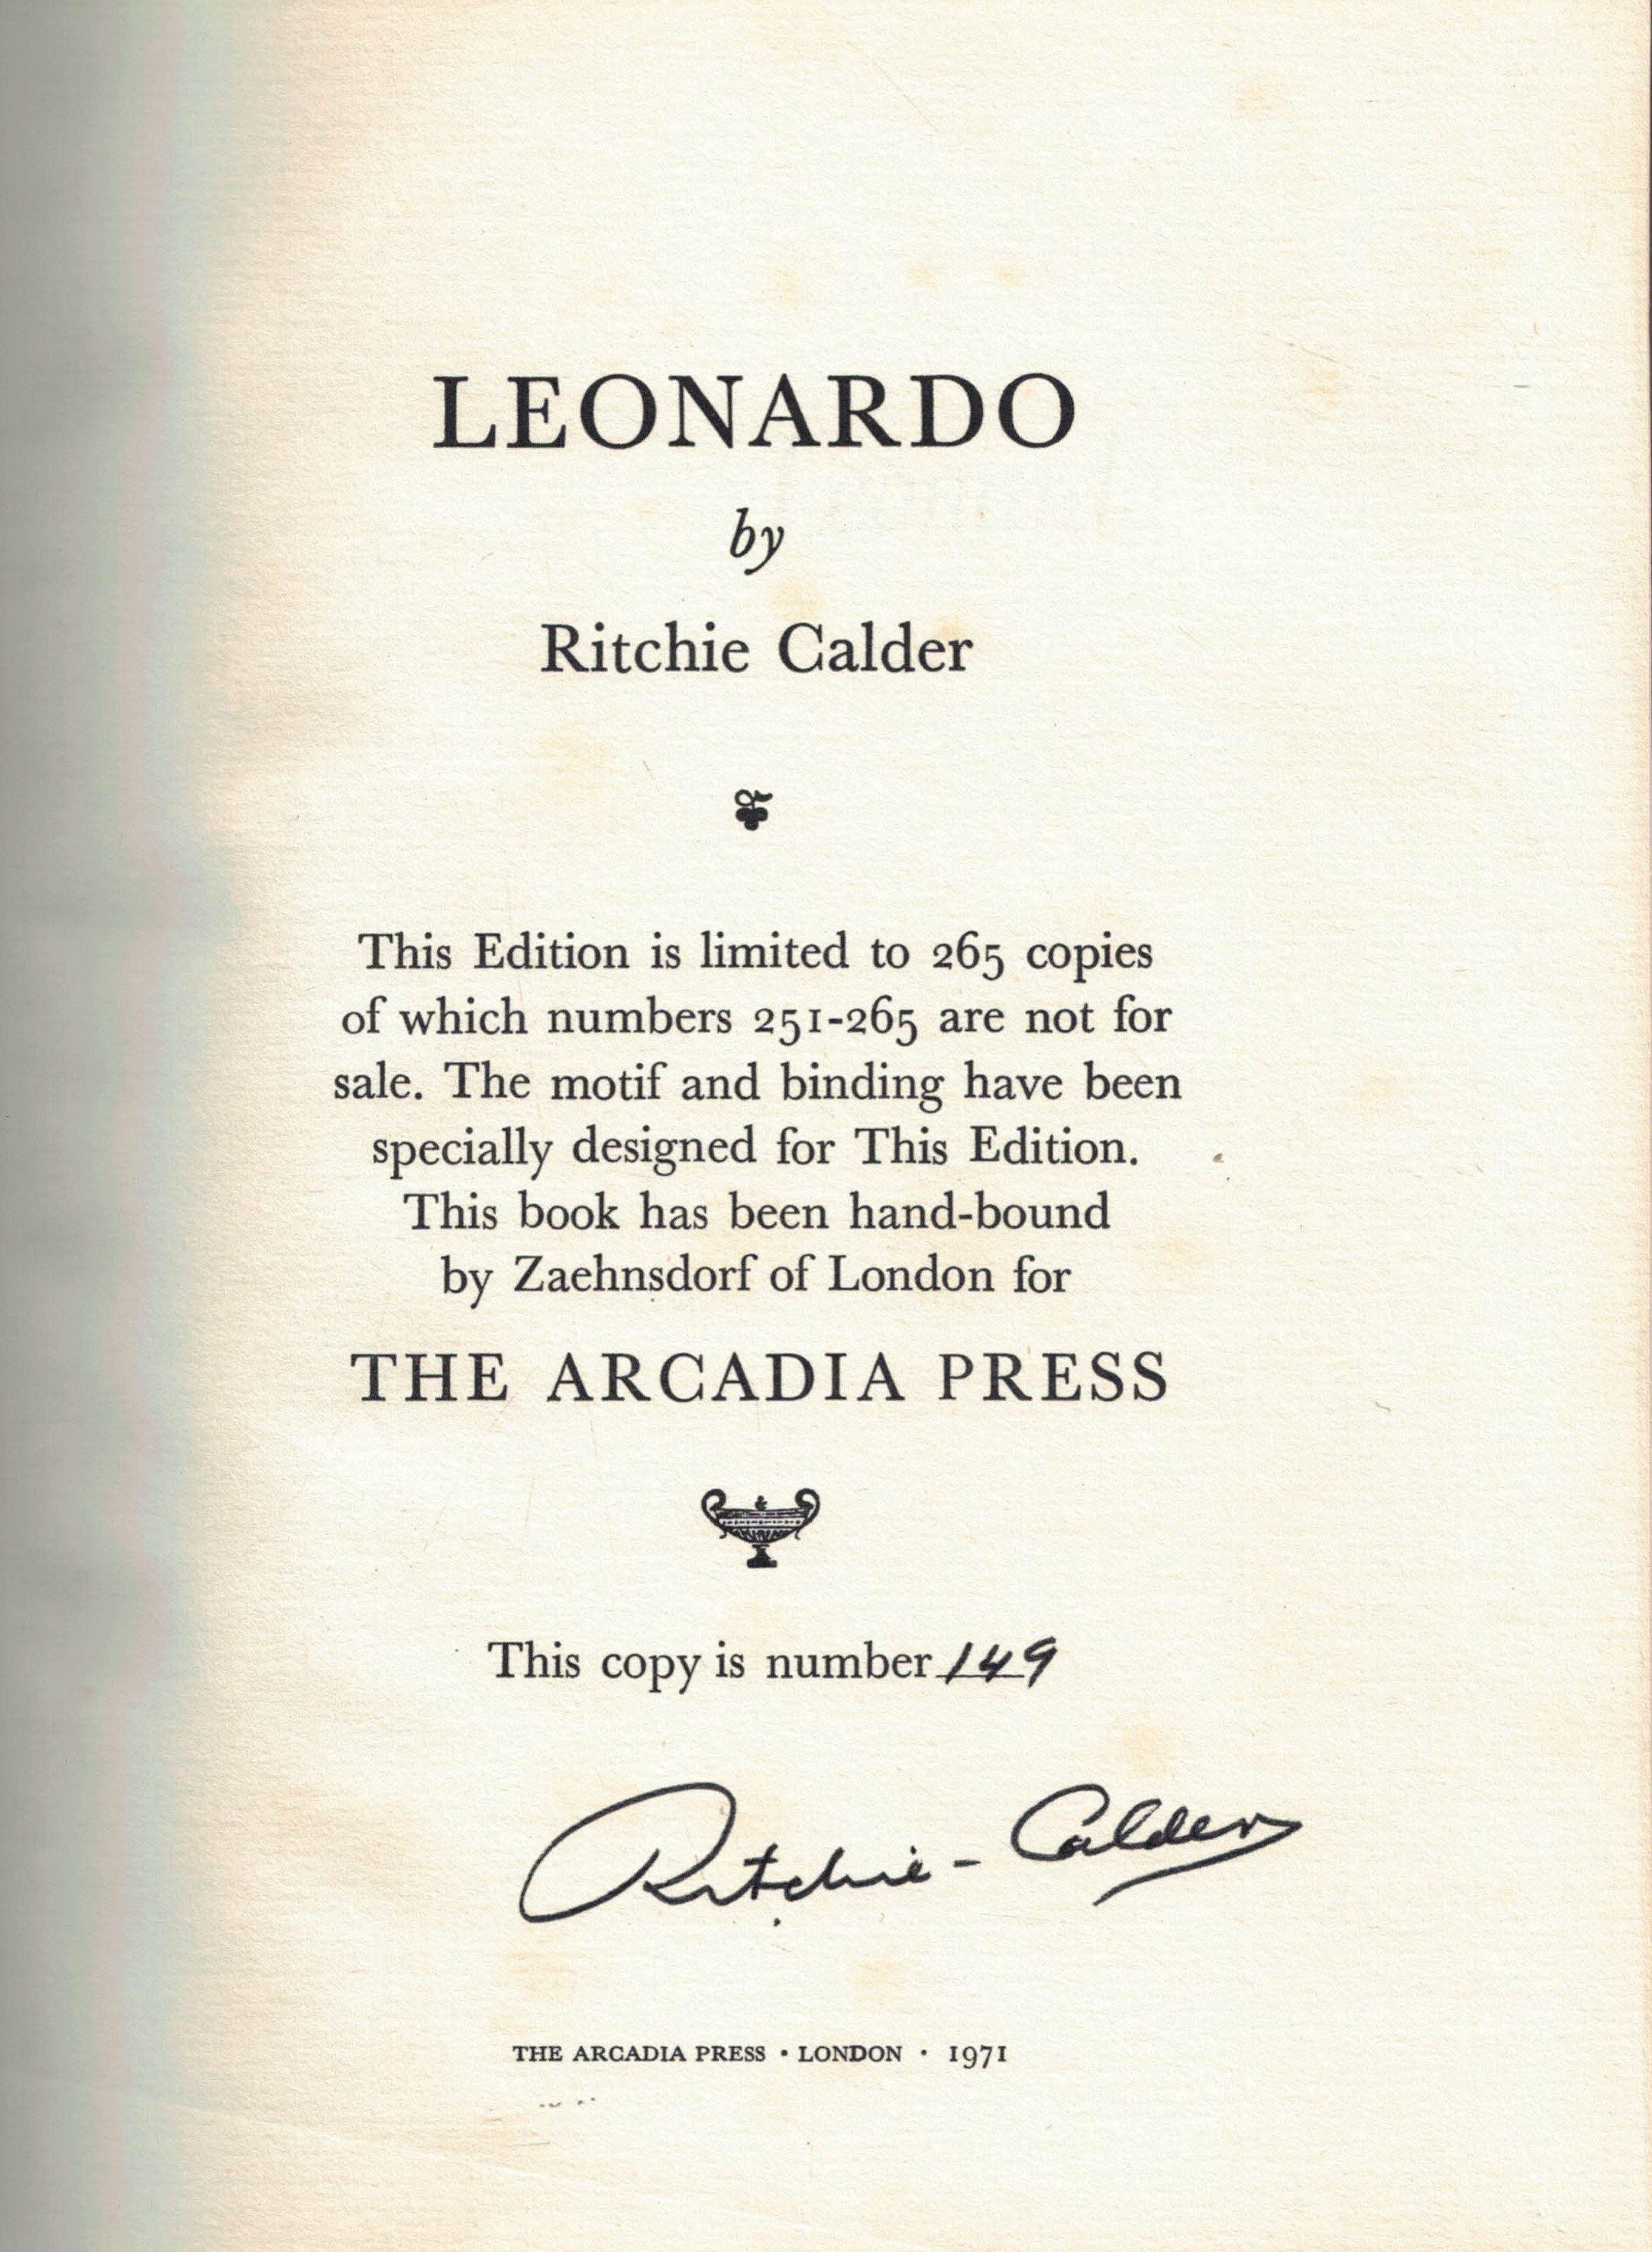 Leonardo. Signed limited edition.